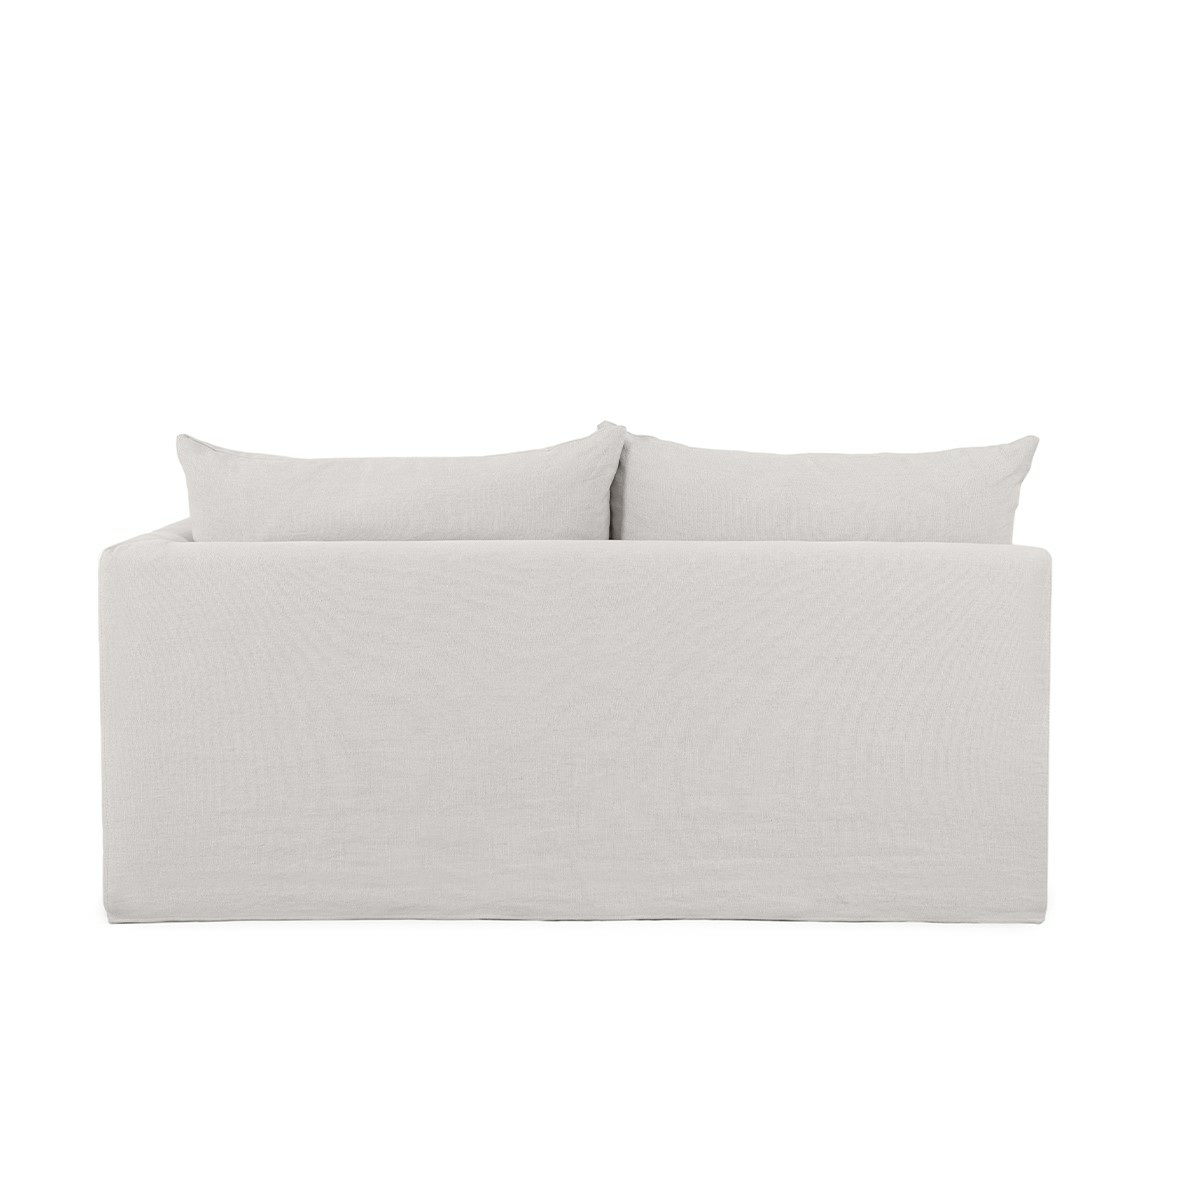 SuperBox sofa - Right armrest, L51 x D71 x H34 in - Cotton - image 5